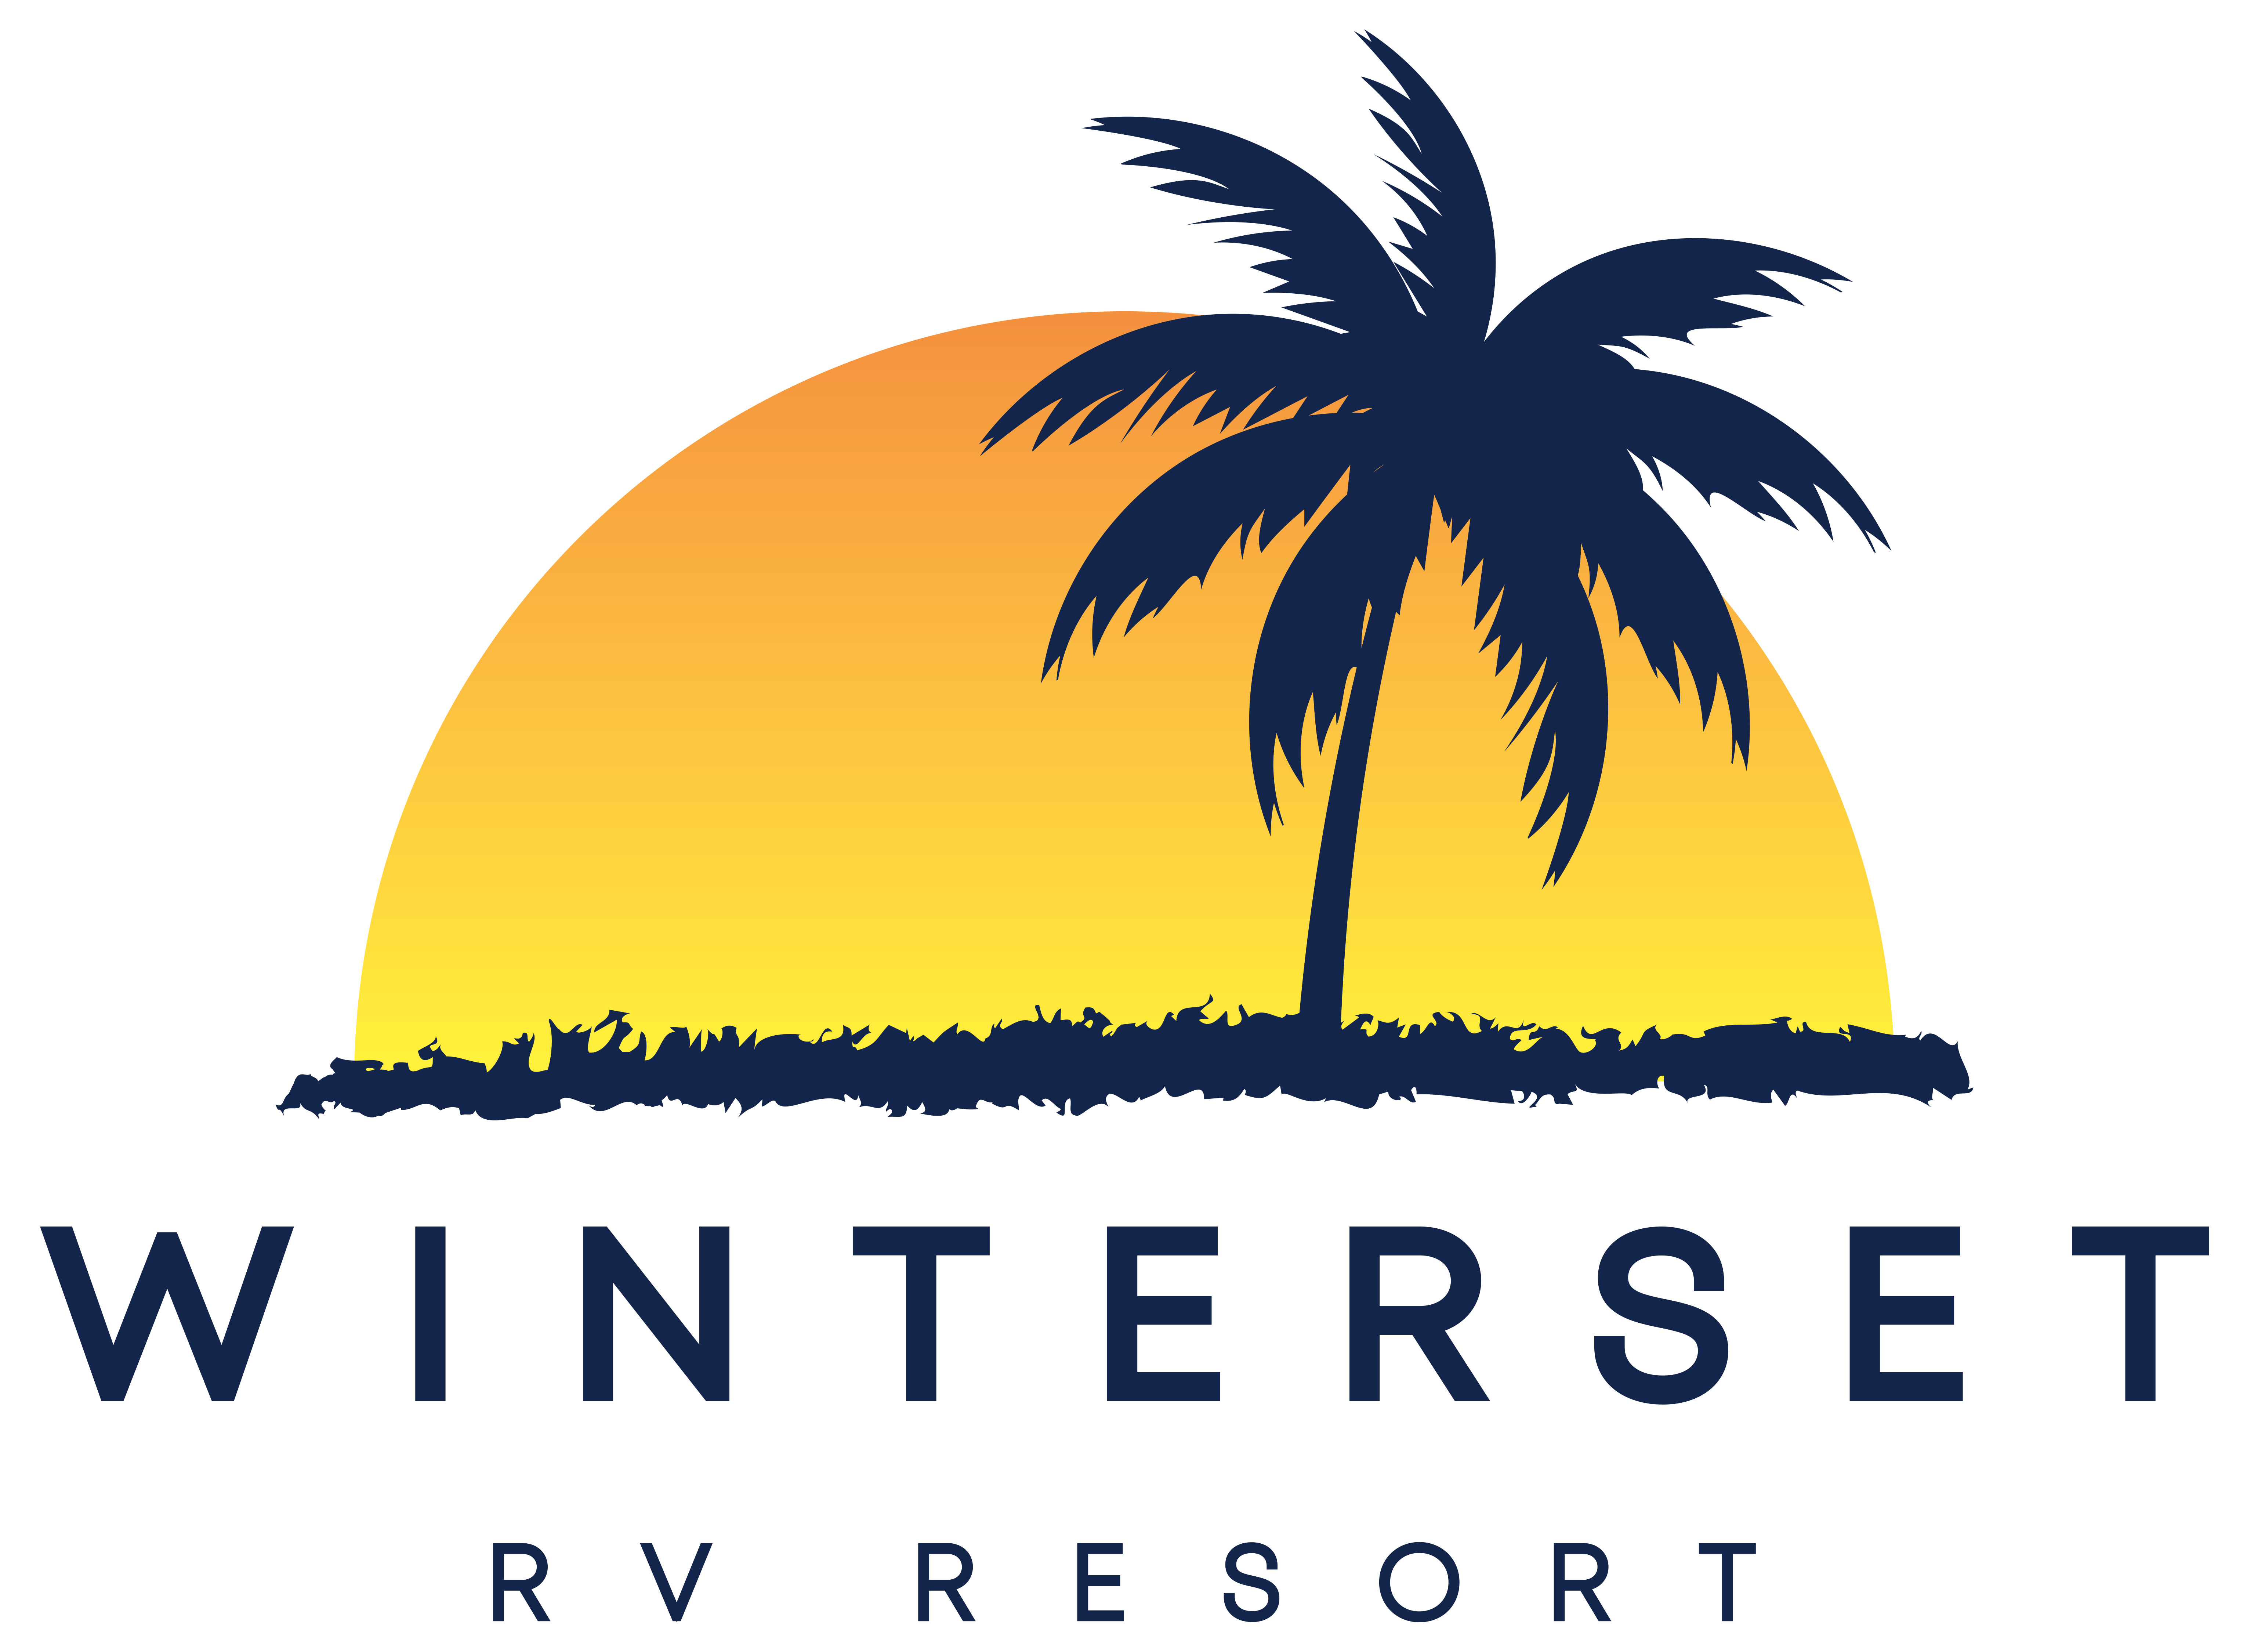 Winterset RV Resort